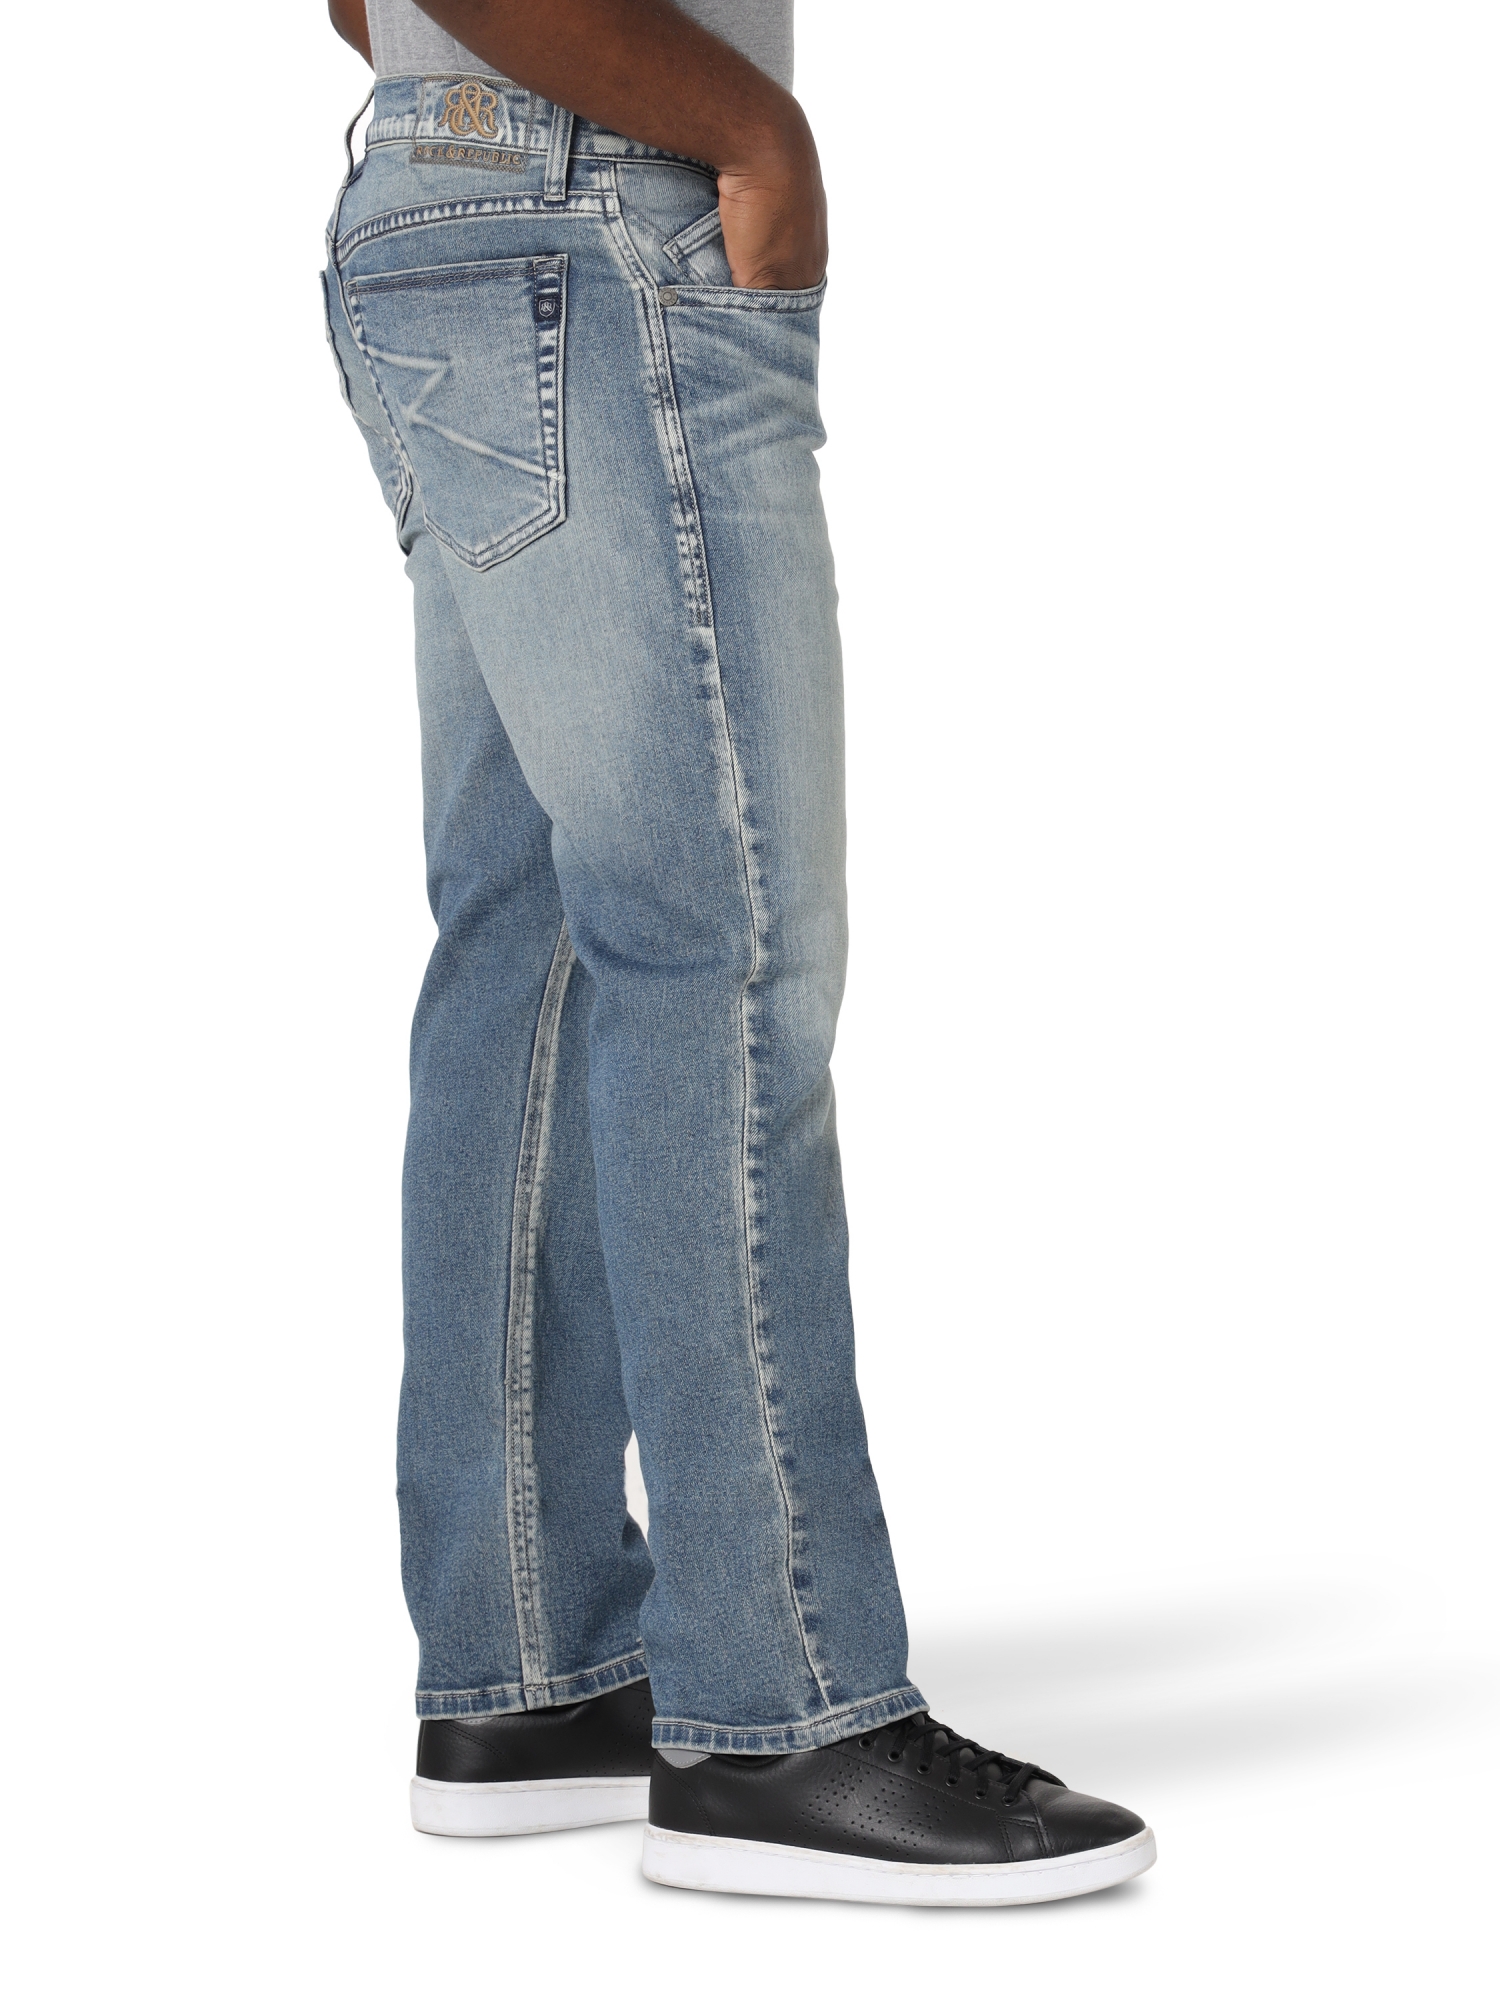 Rock & Republic Men's Straight Leg Jean with Ultra Comfort Denim - image 4 of 5